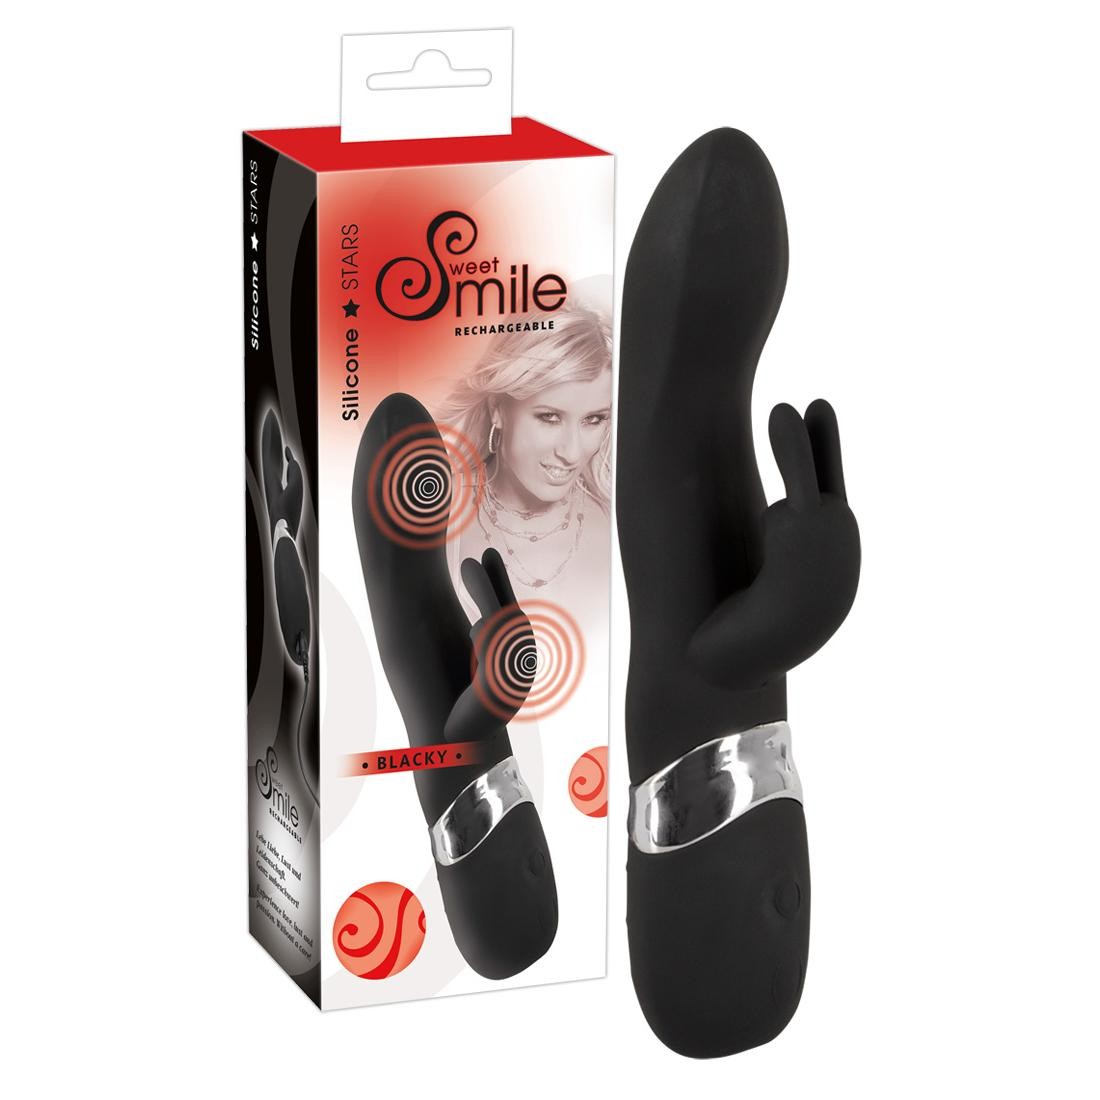  Sweet  Smile  -  Sweet  Smile  Blacky  USB  -  Vibrator  mit  Klitorisreizer 